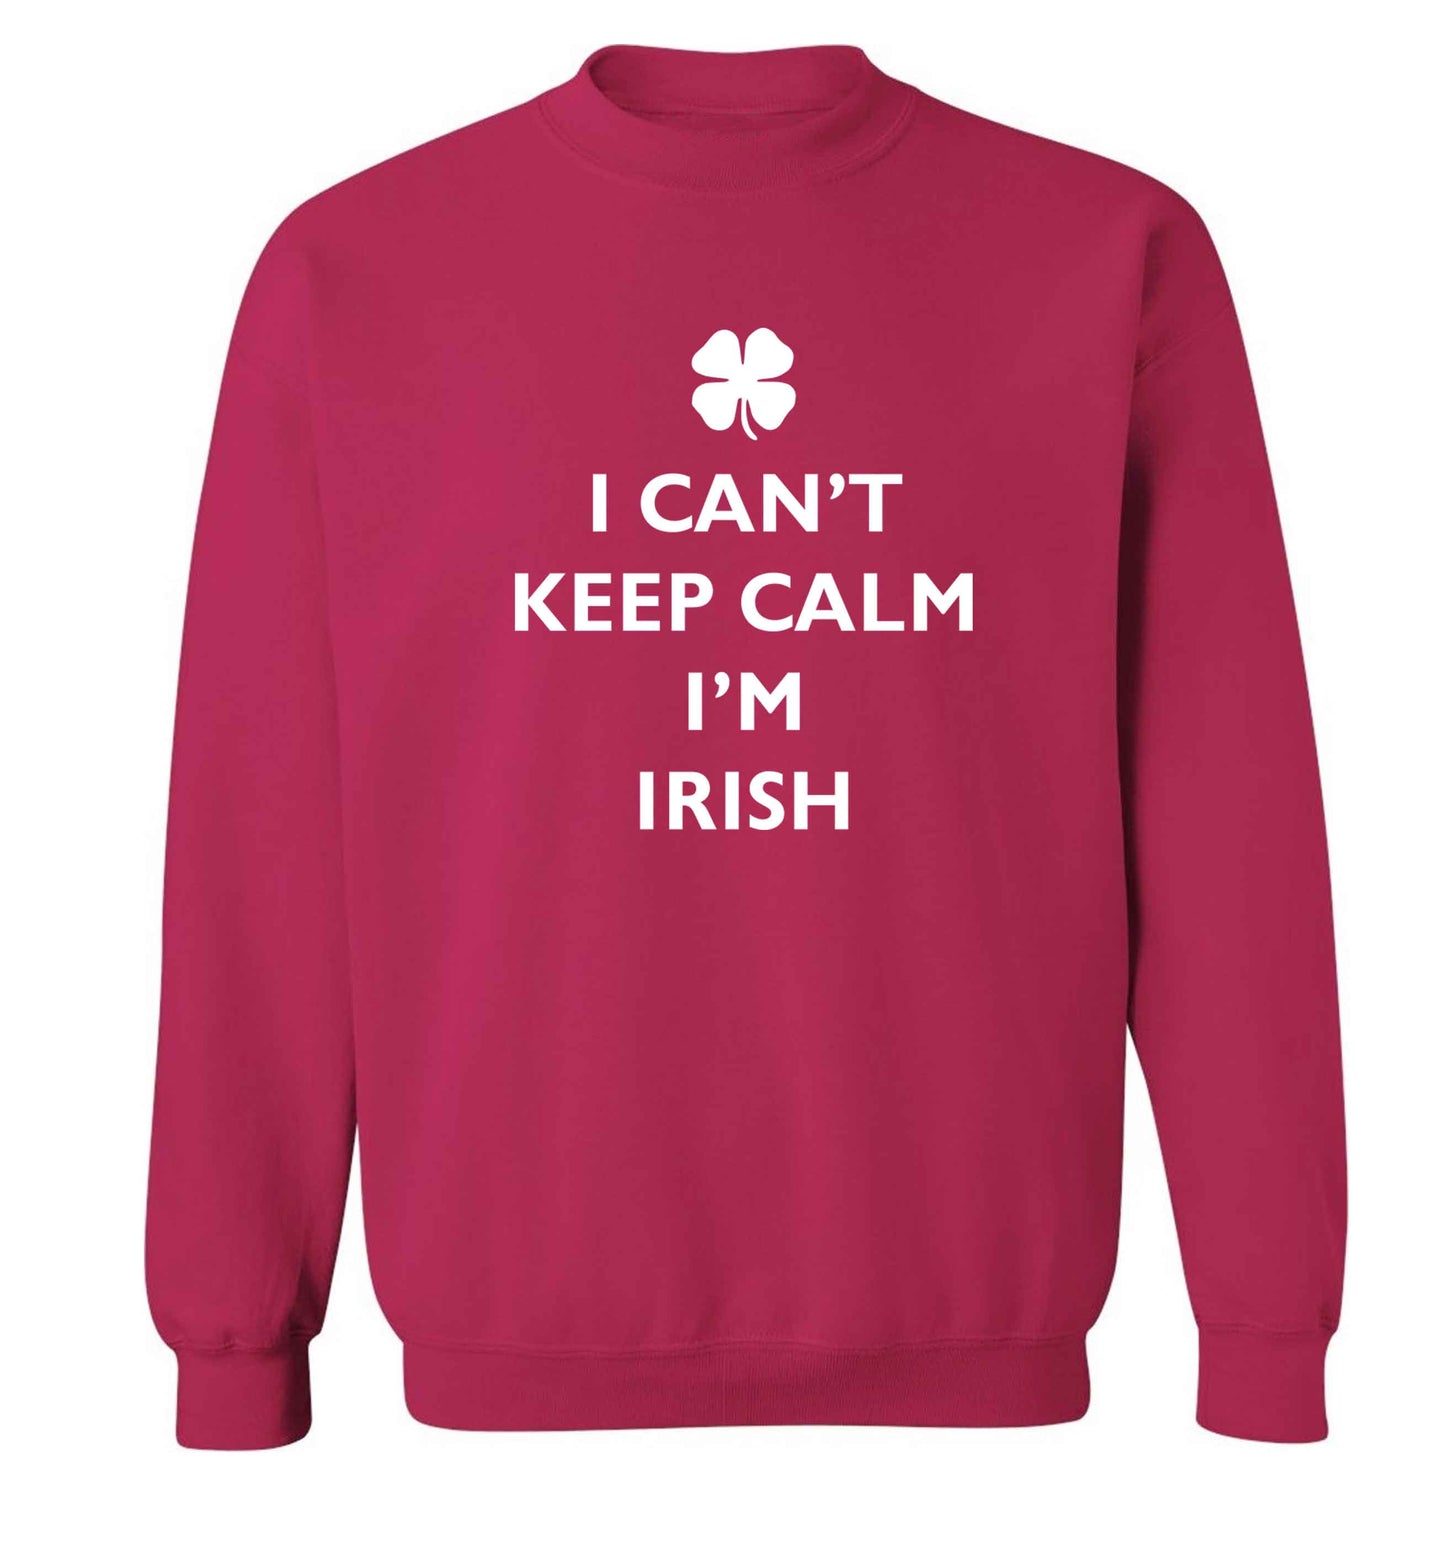 I can't keep calm I'm Irish adult's unisex pink sweater 2XL